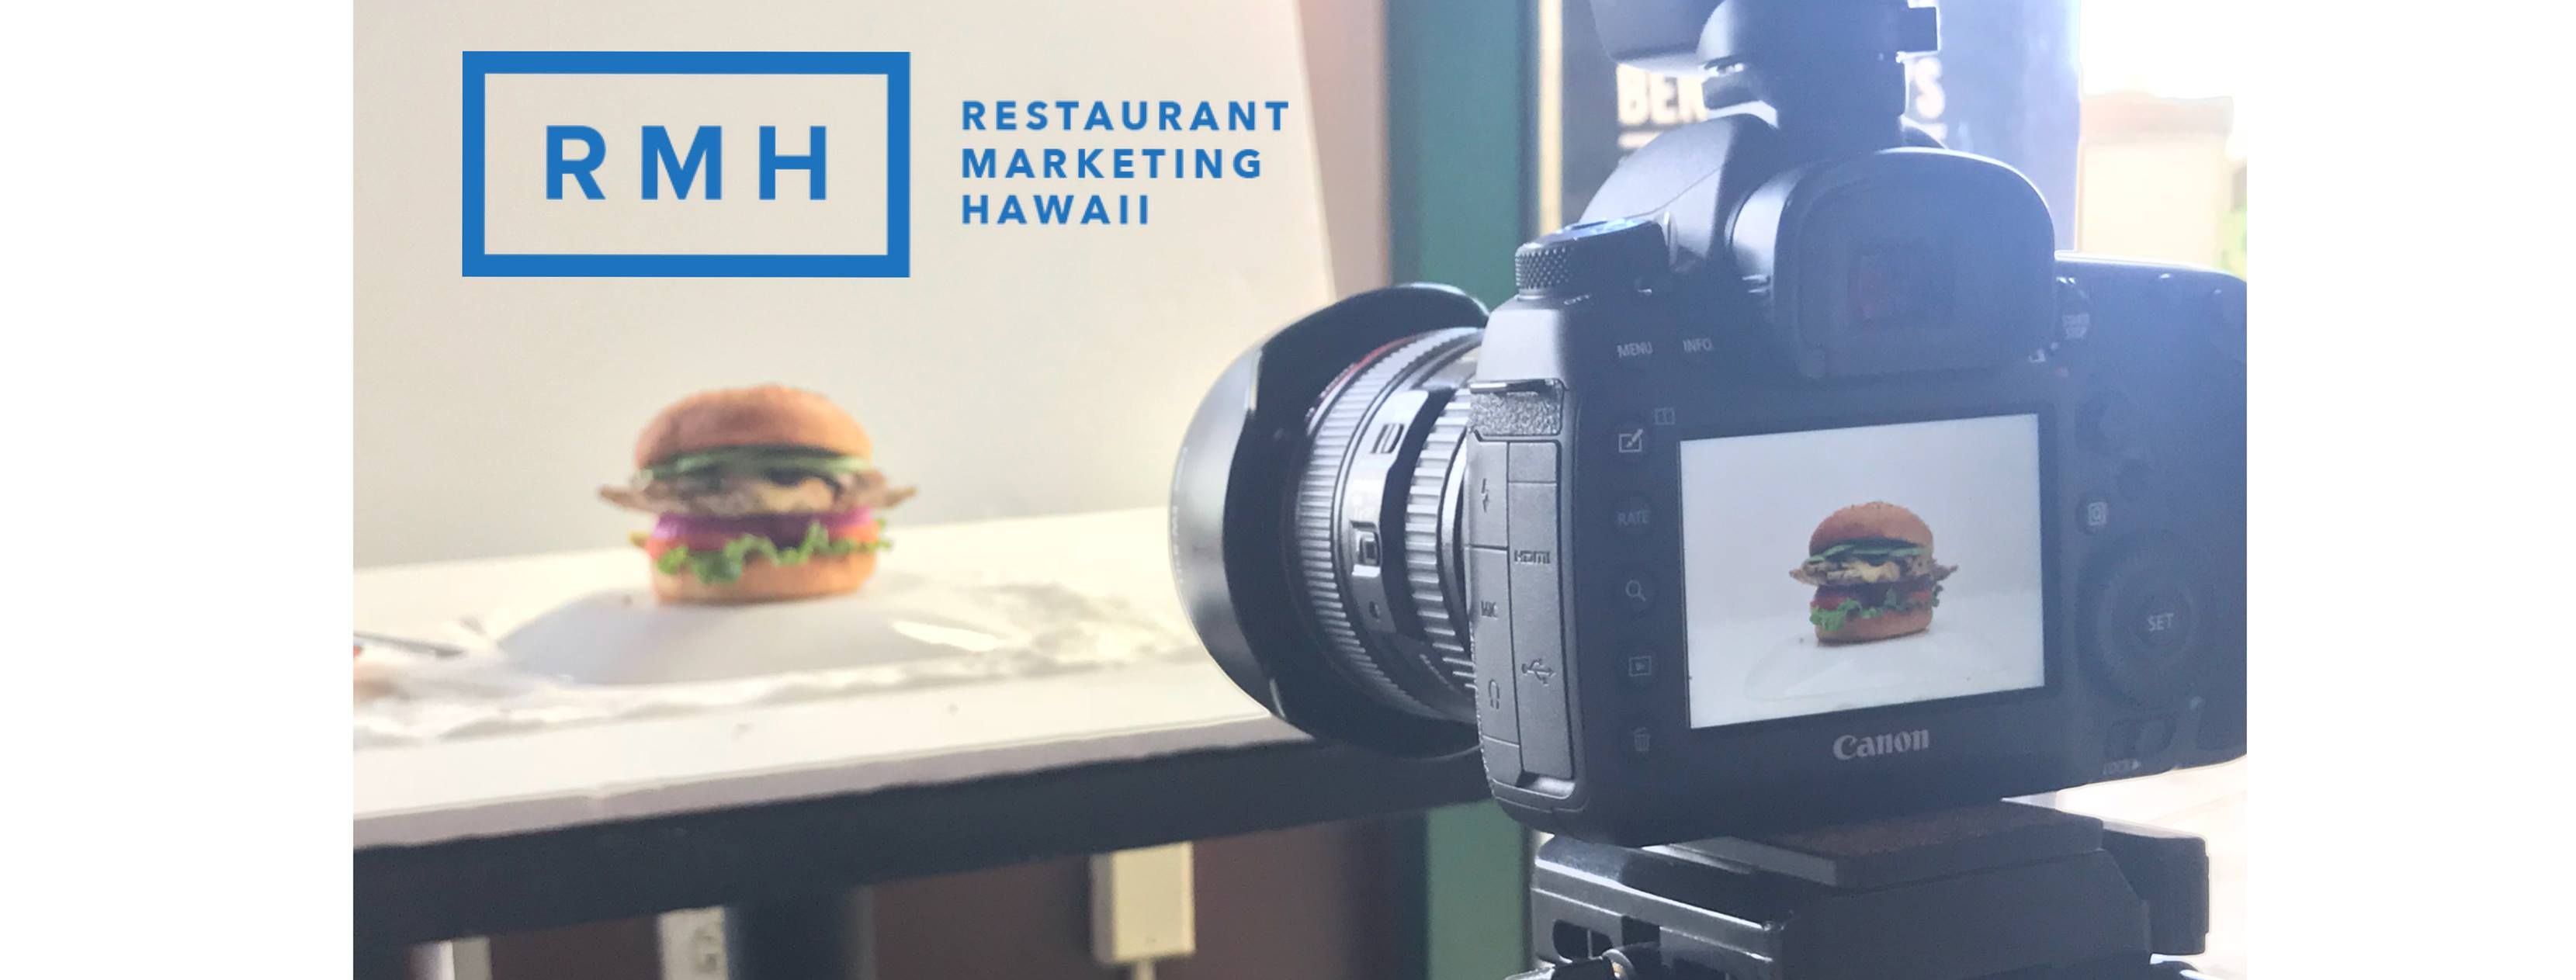 Restaurant Marketing Hawaii